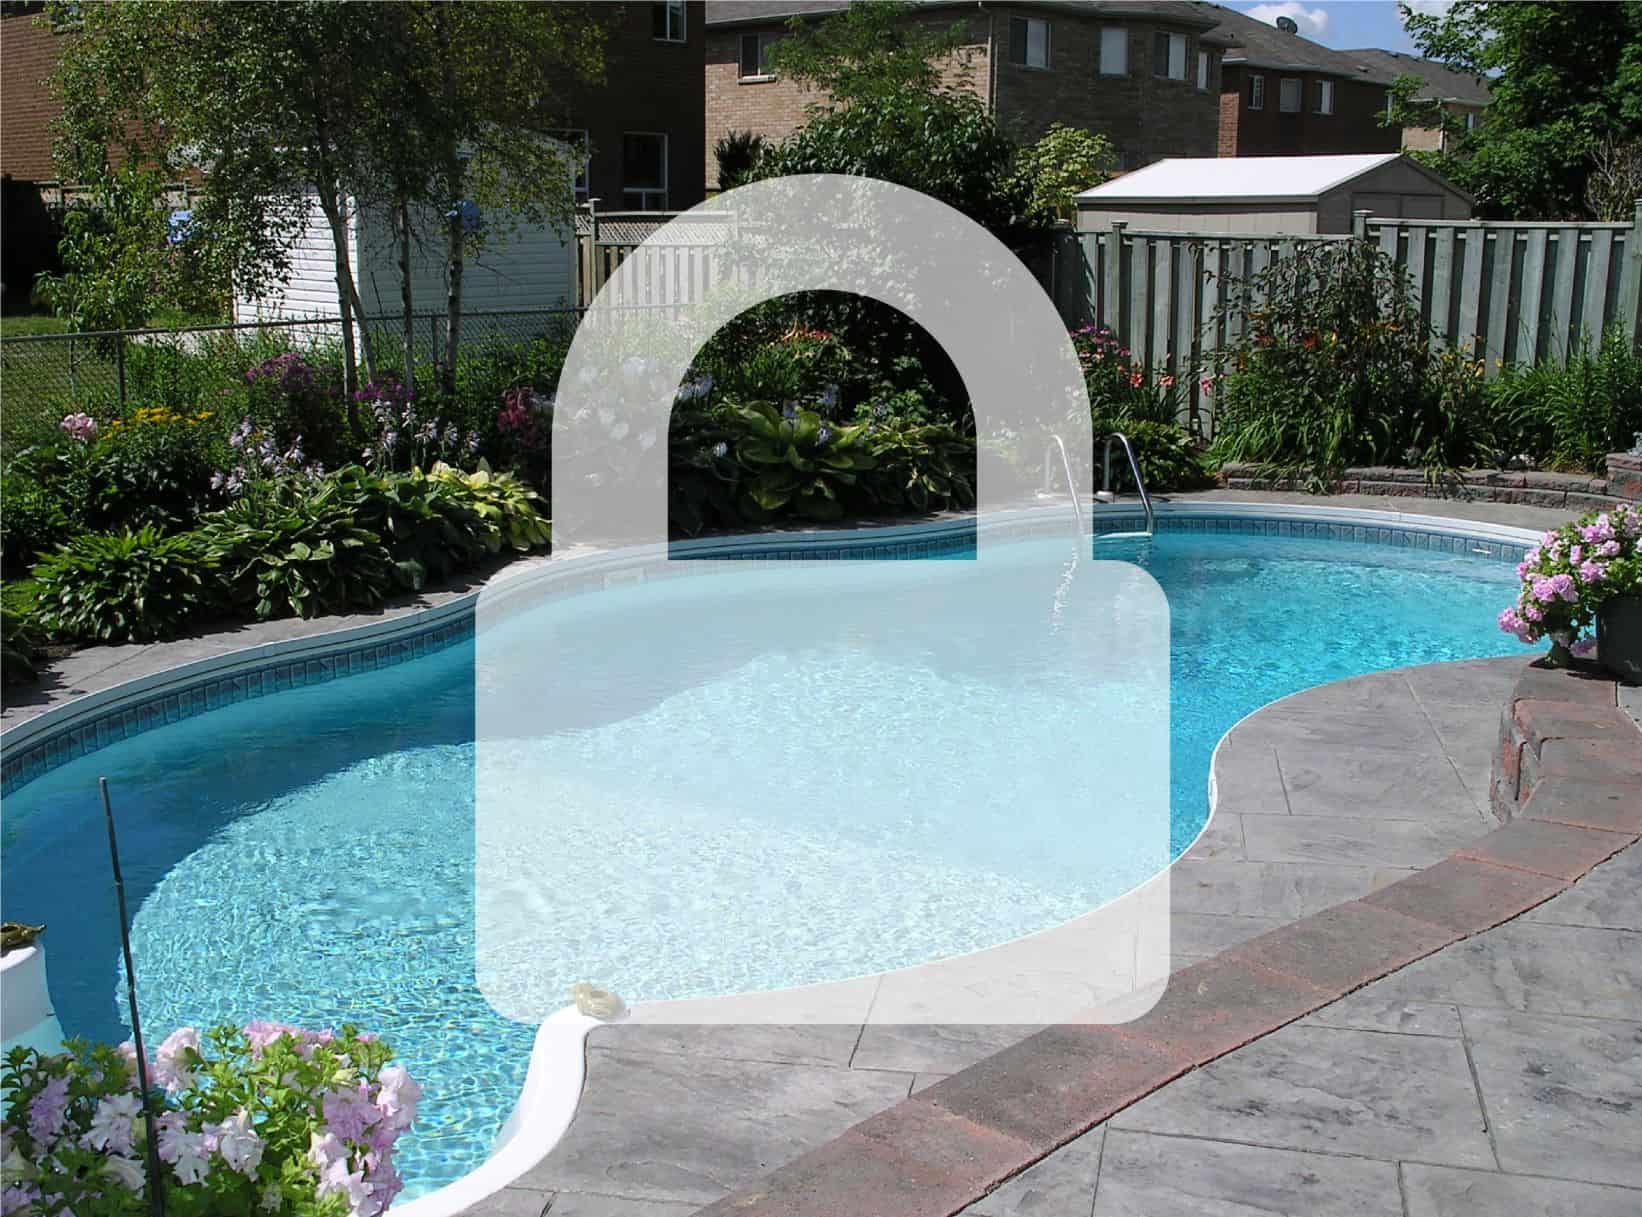 locked swimming pool fences gates